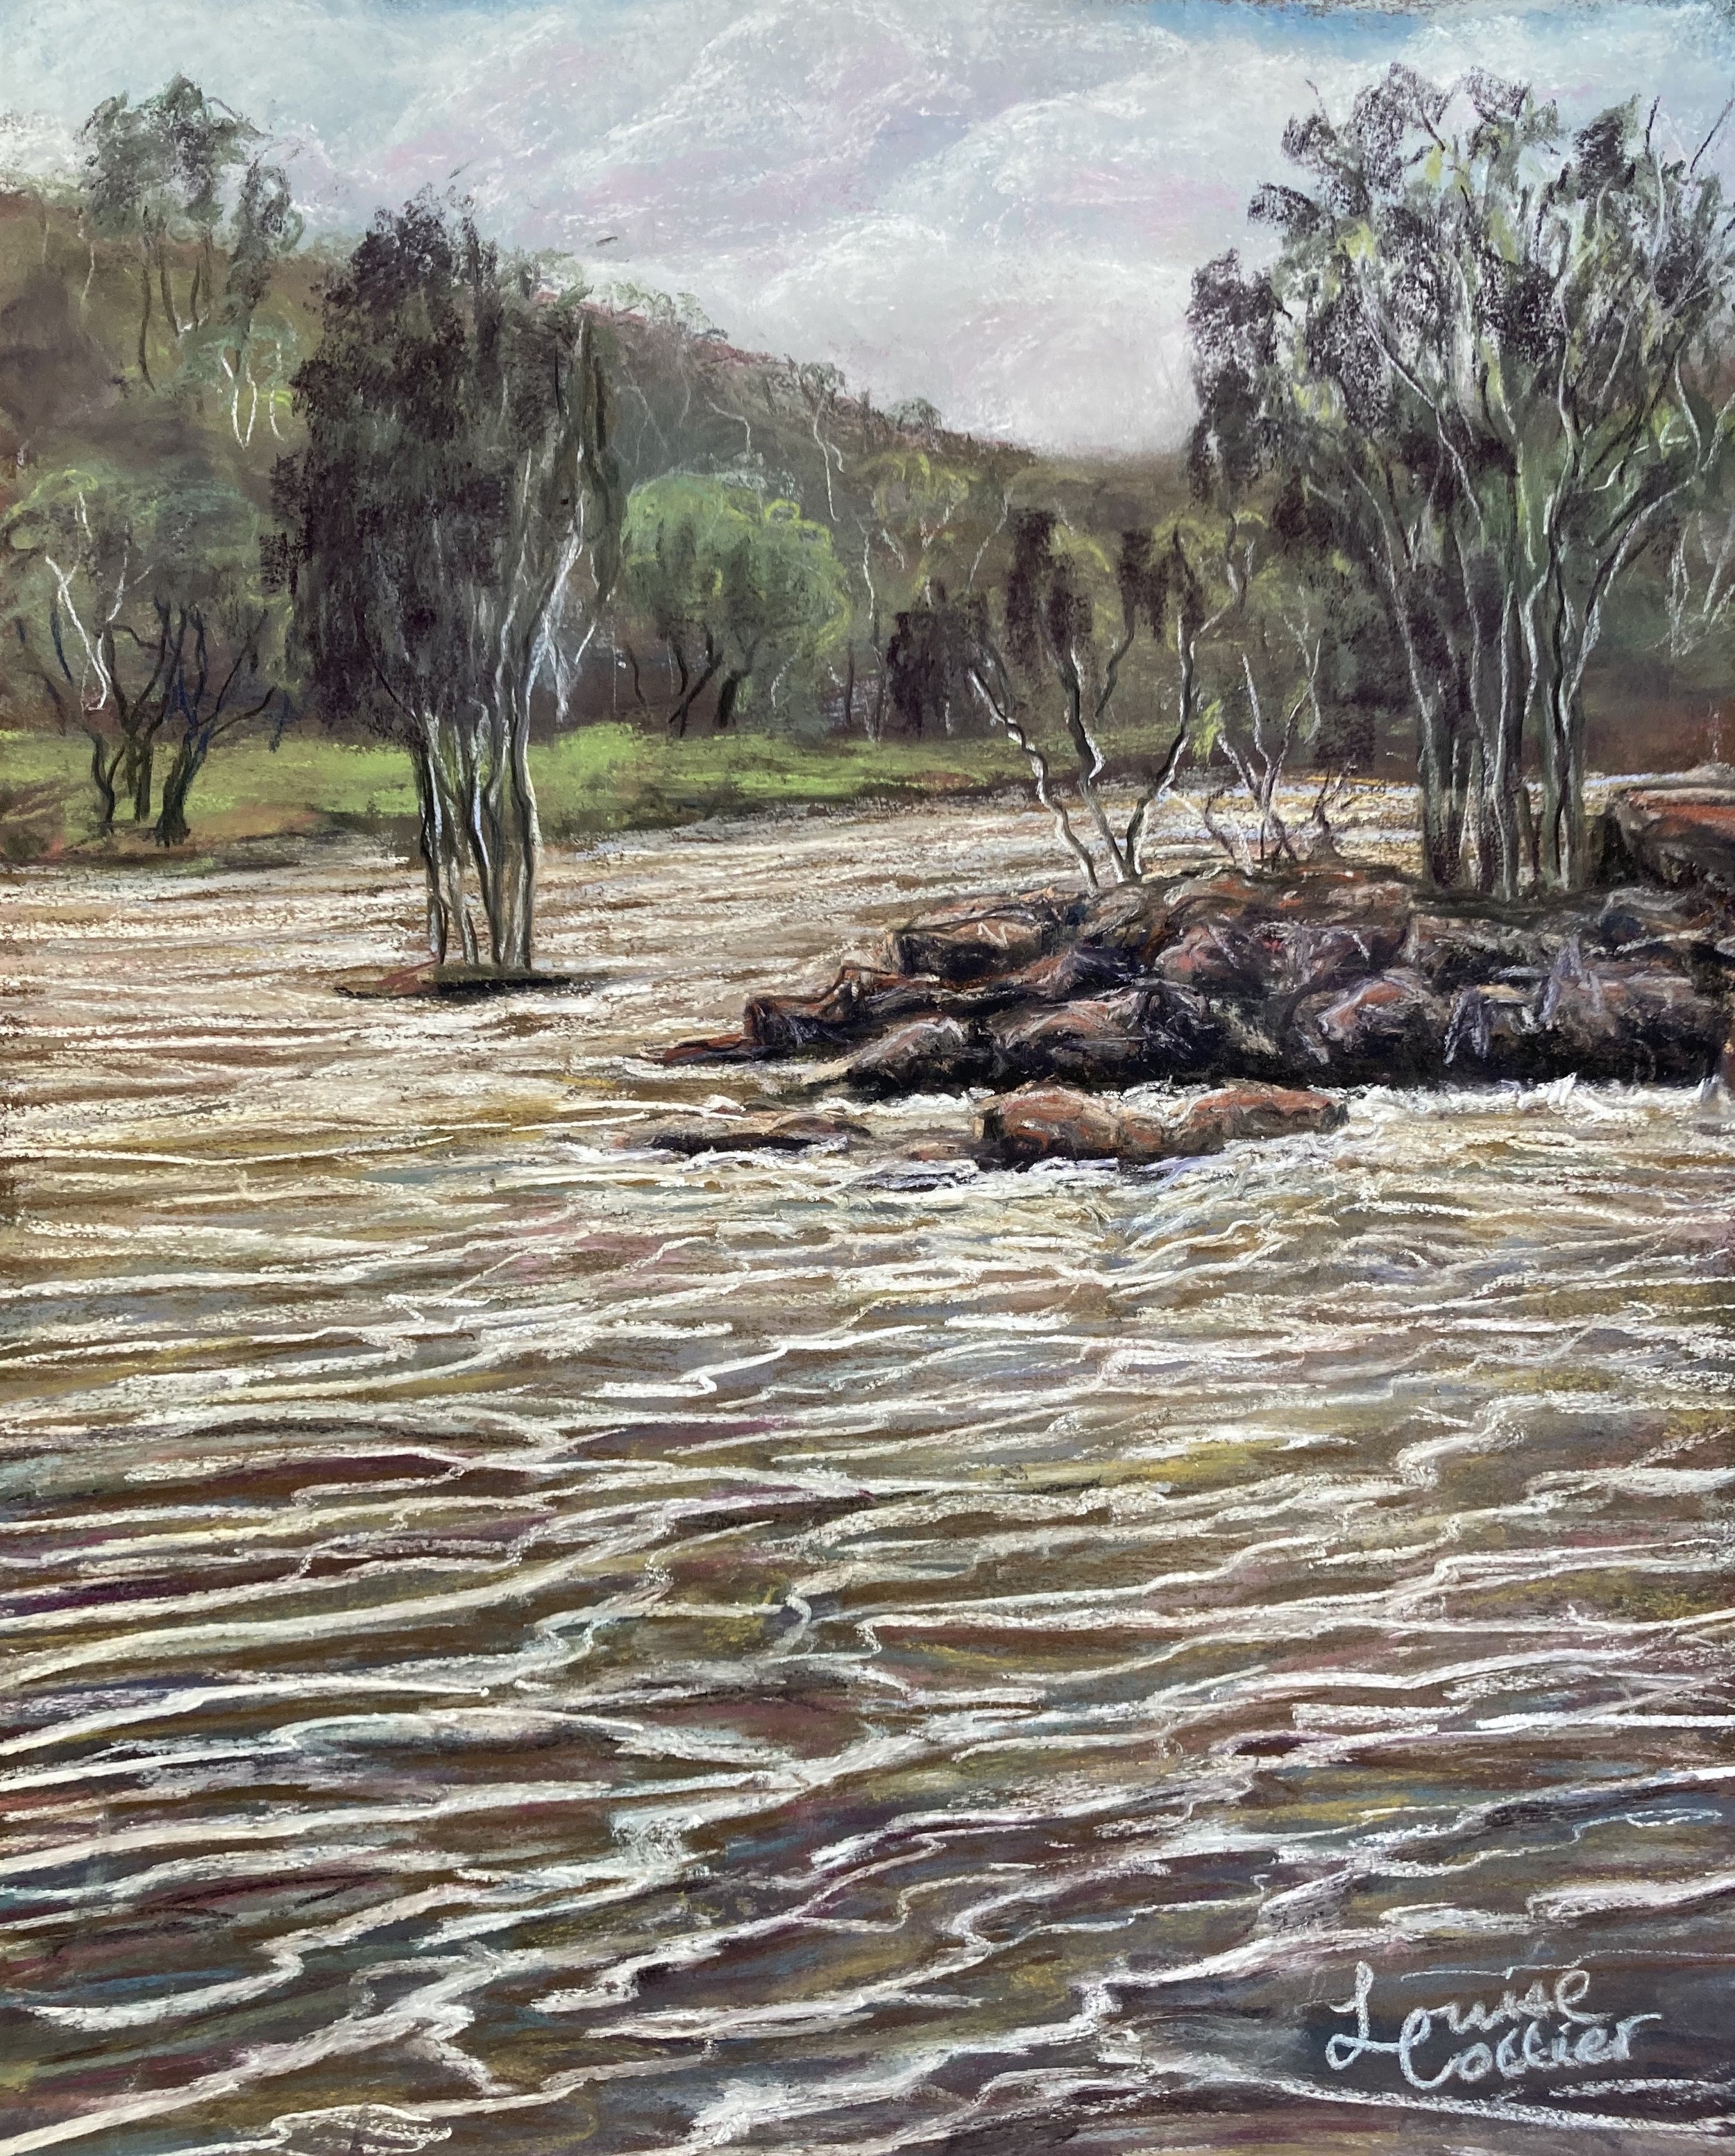 Louise Collier_Lower Bells Rapids in flood_pastels on paper_$450.jpg